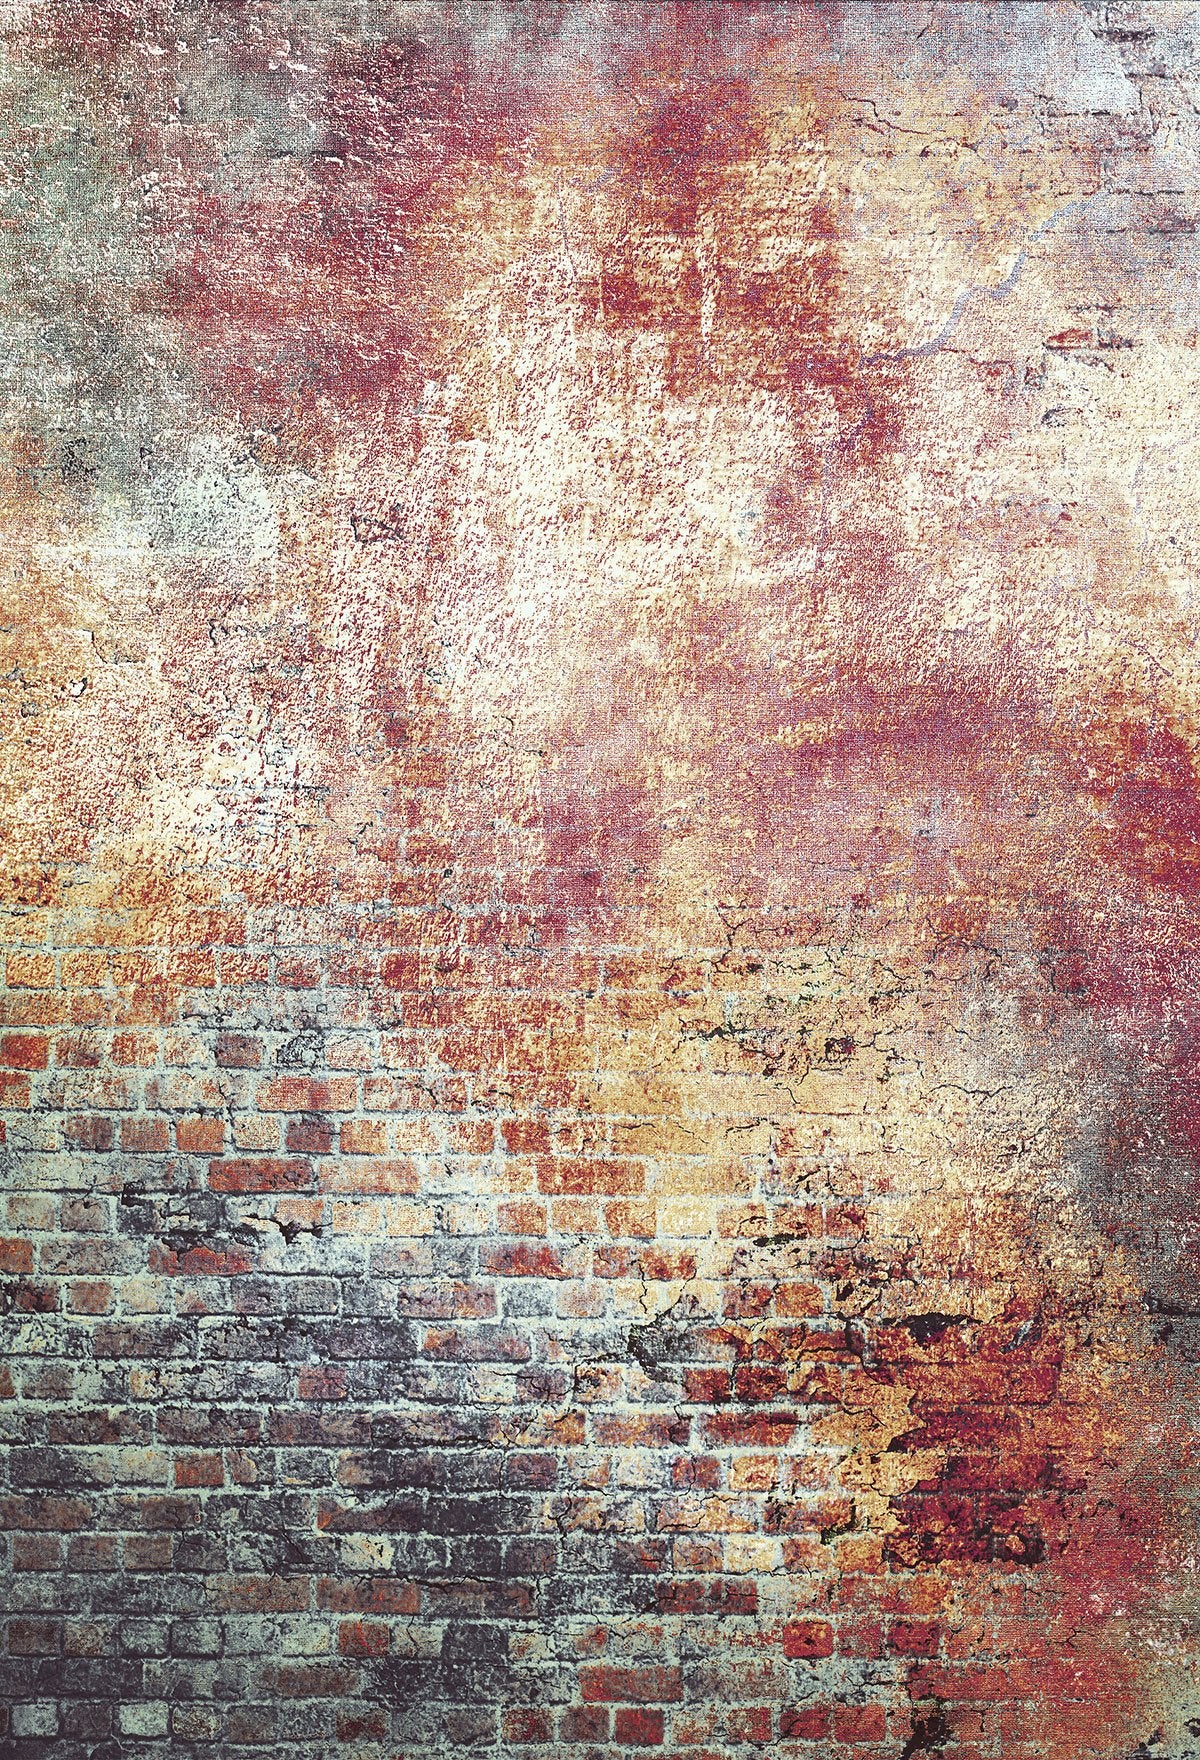 White Brick Wall Photography Backdrop UK for Studio LV-138